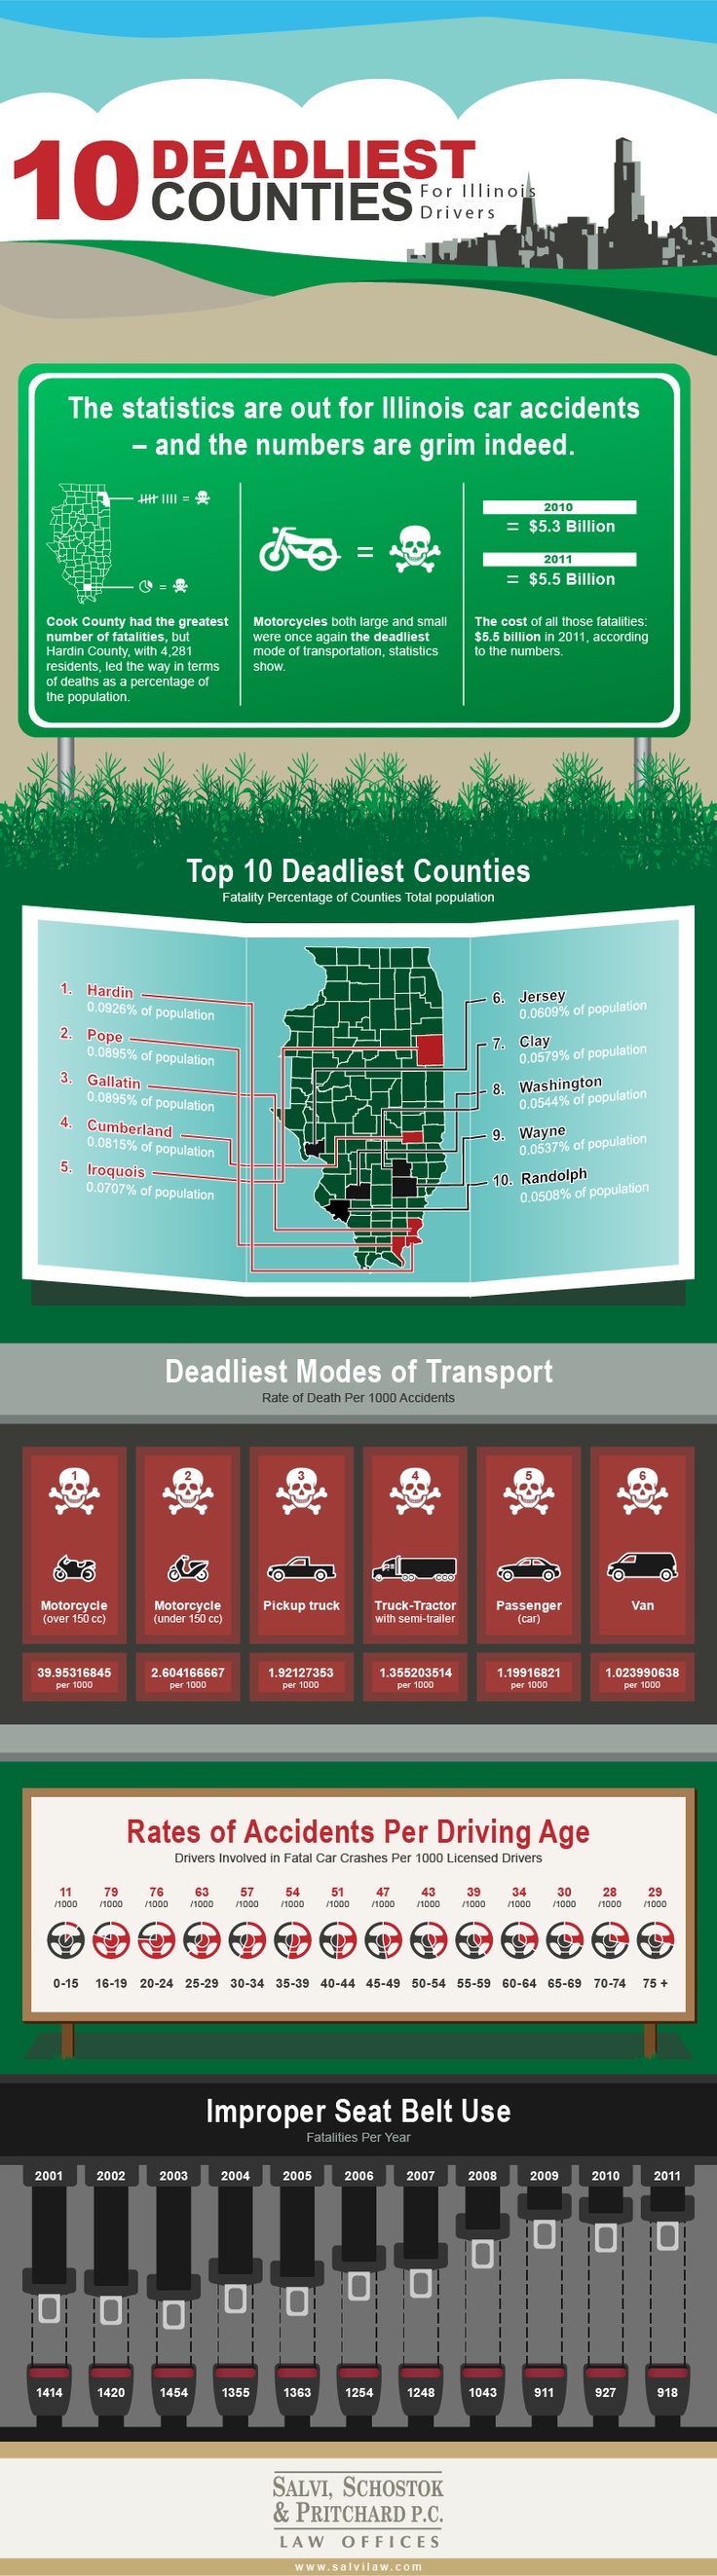 10 Deadliest Counties in Illinois